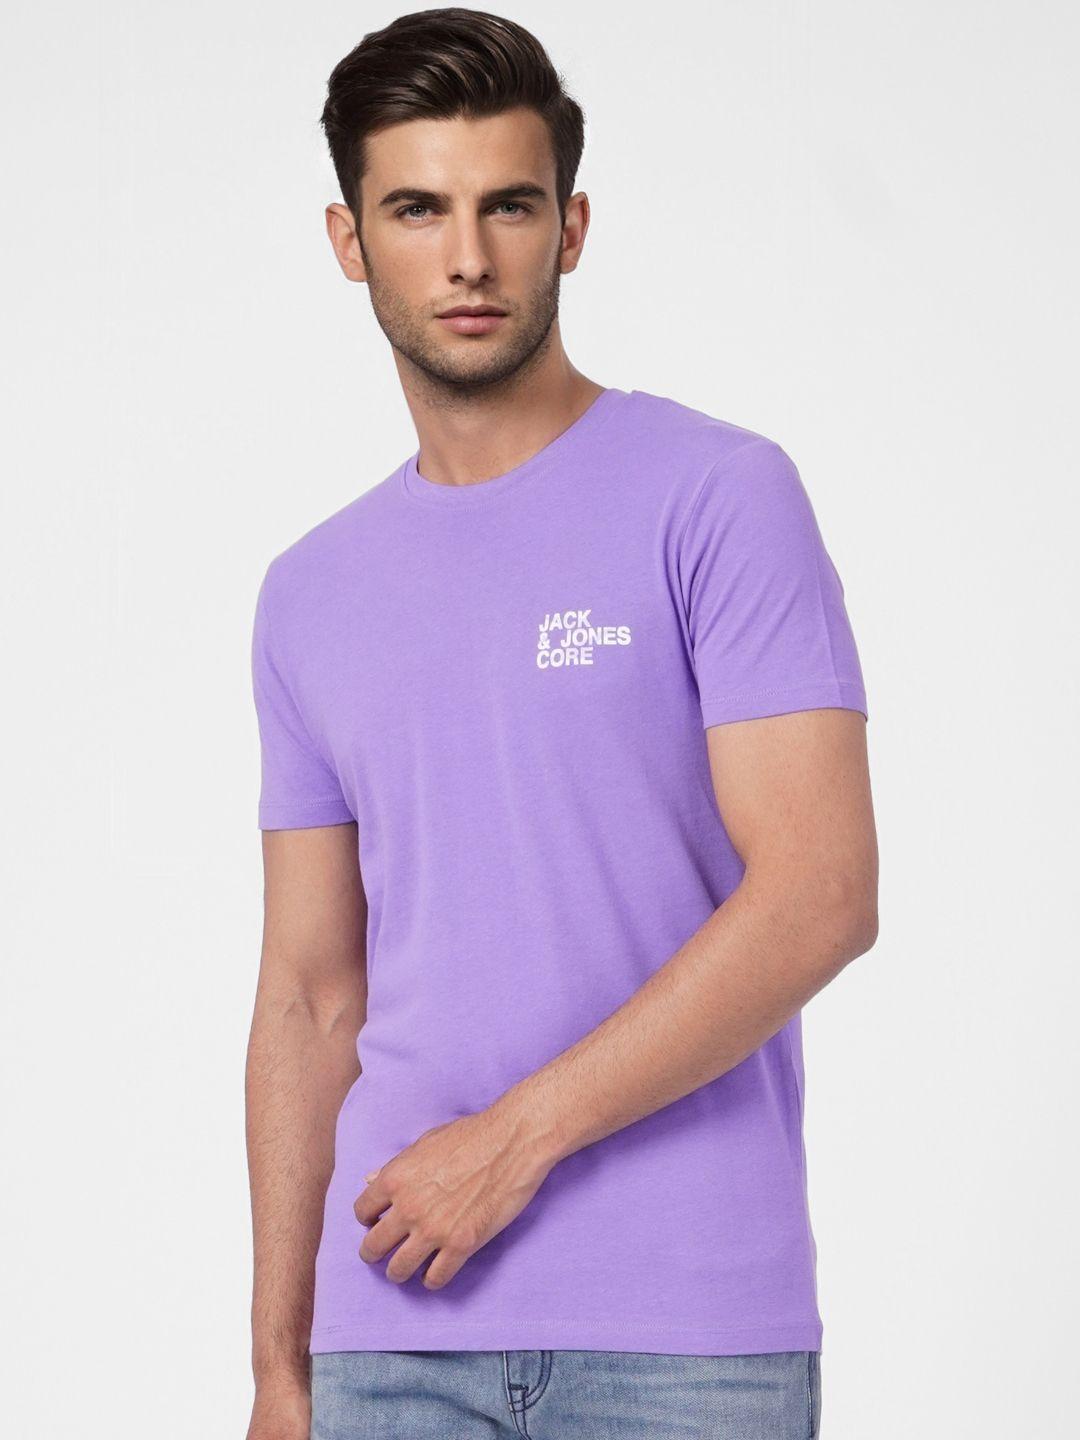 jack & jones men purple & off white typography printed slim fit pure cotton casual t-shirt